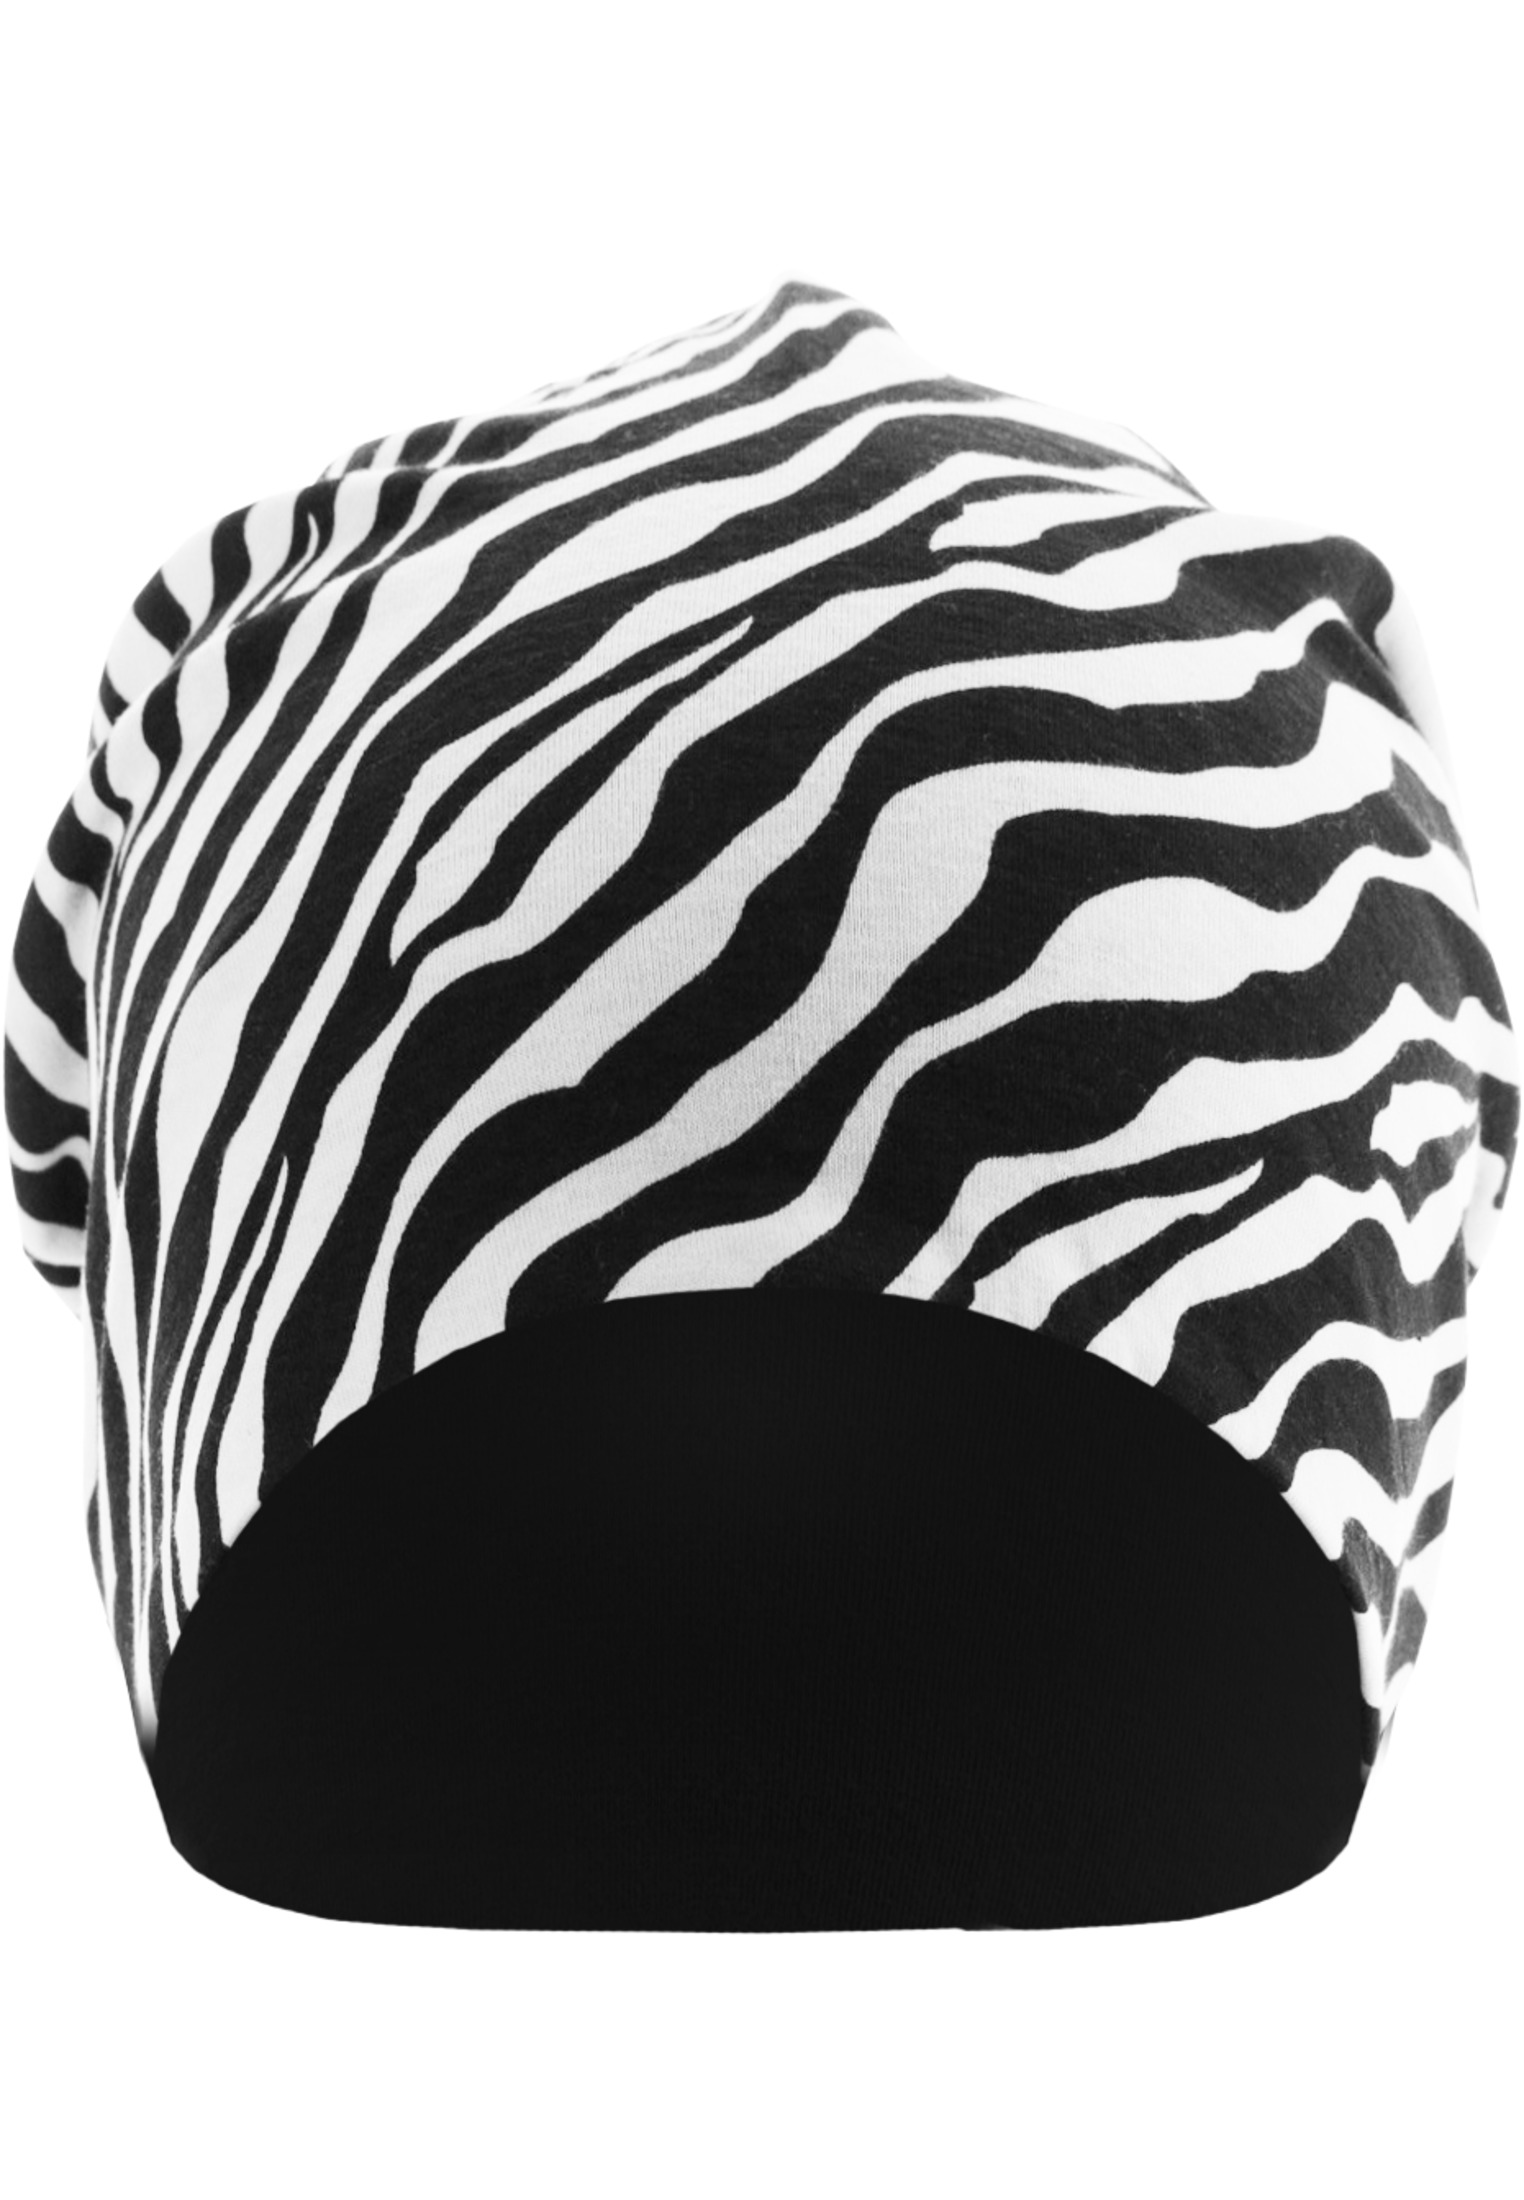 Caps & Beanies Printed Jersey Beanie in Farbe Zebra/black